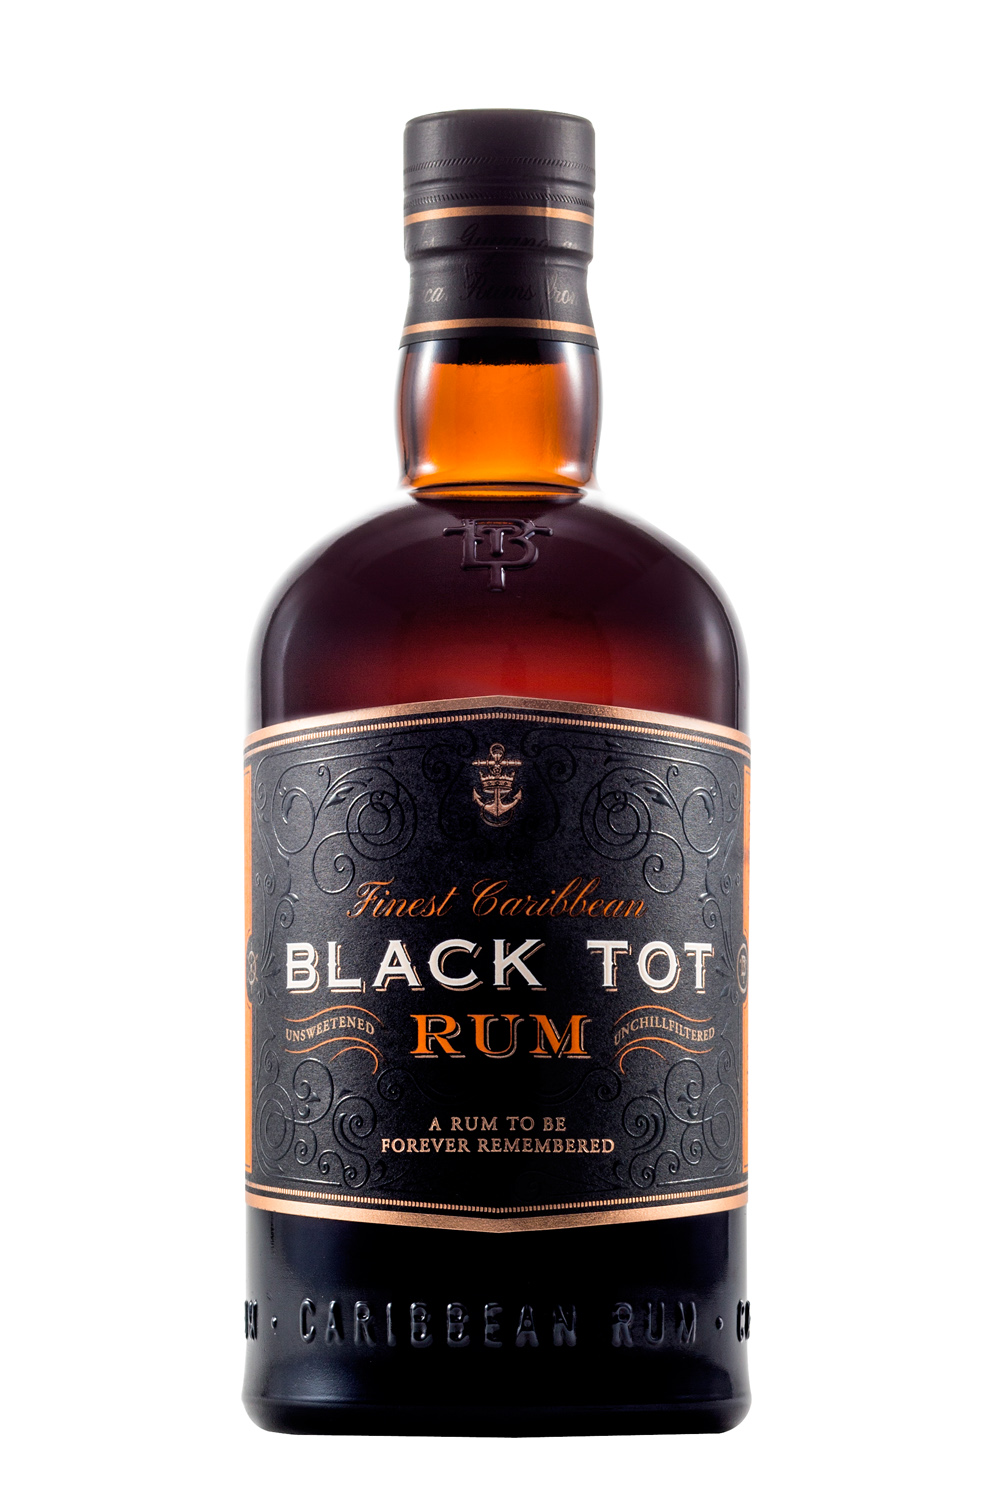 Black Tot Finest Caribbean Rum, 46.2% ABV (70CL)